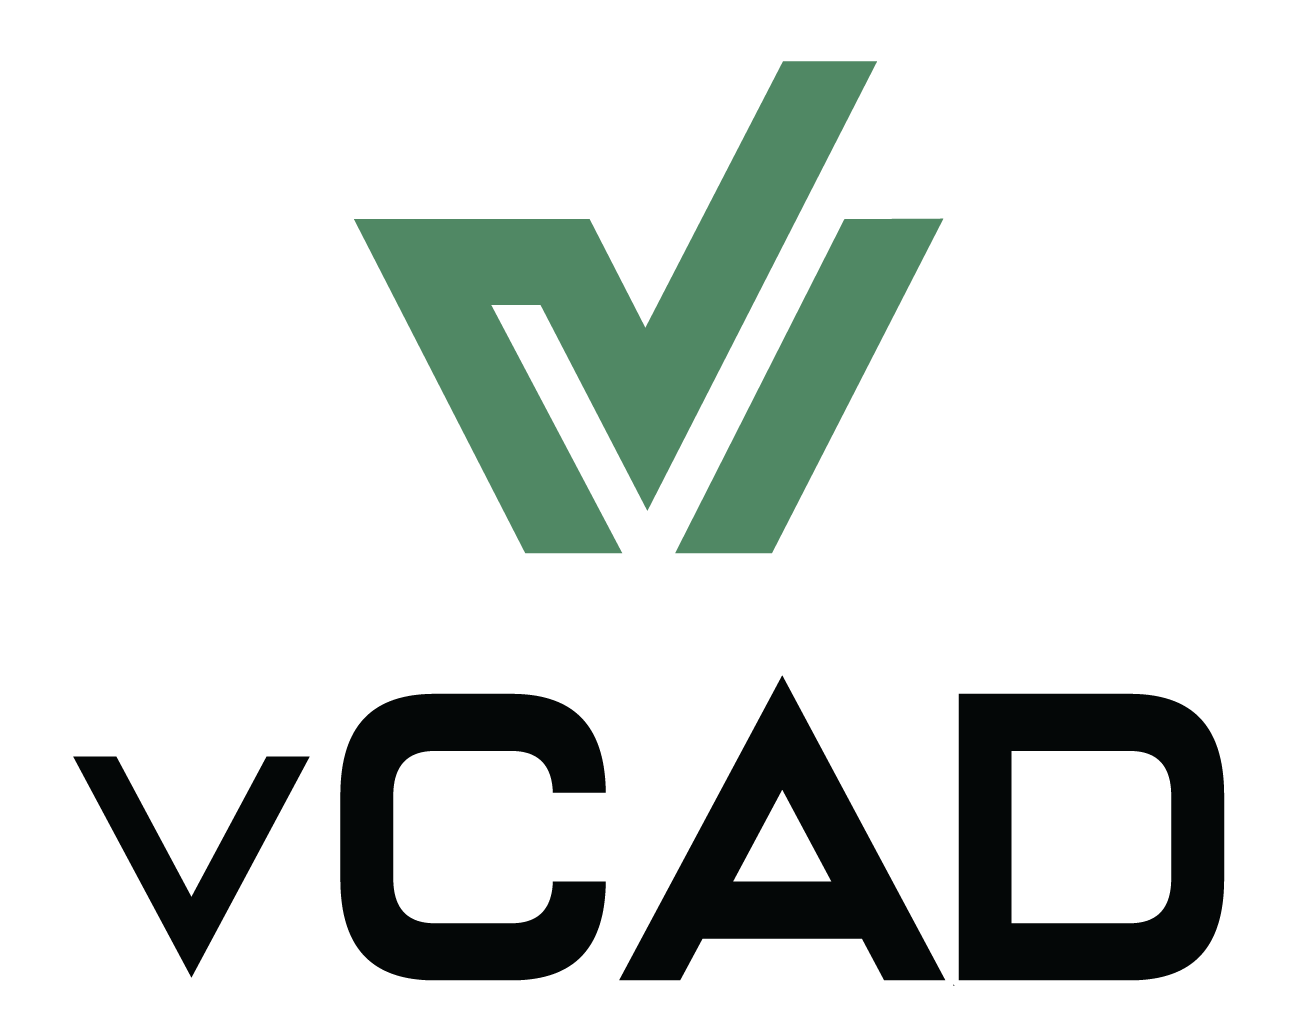 vCAD, cloud based CAD, virtual CAD